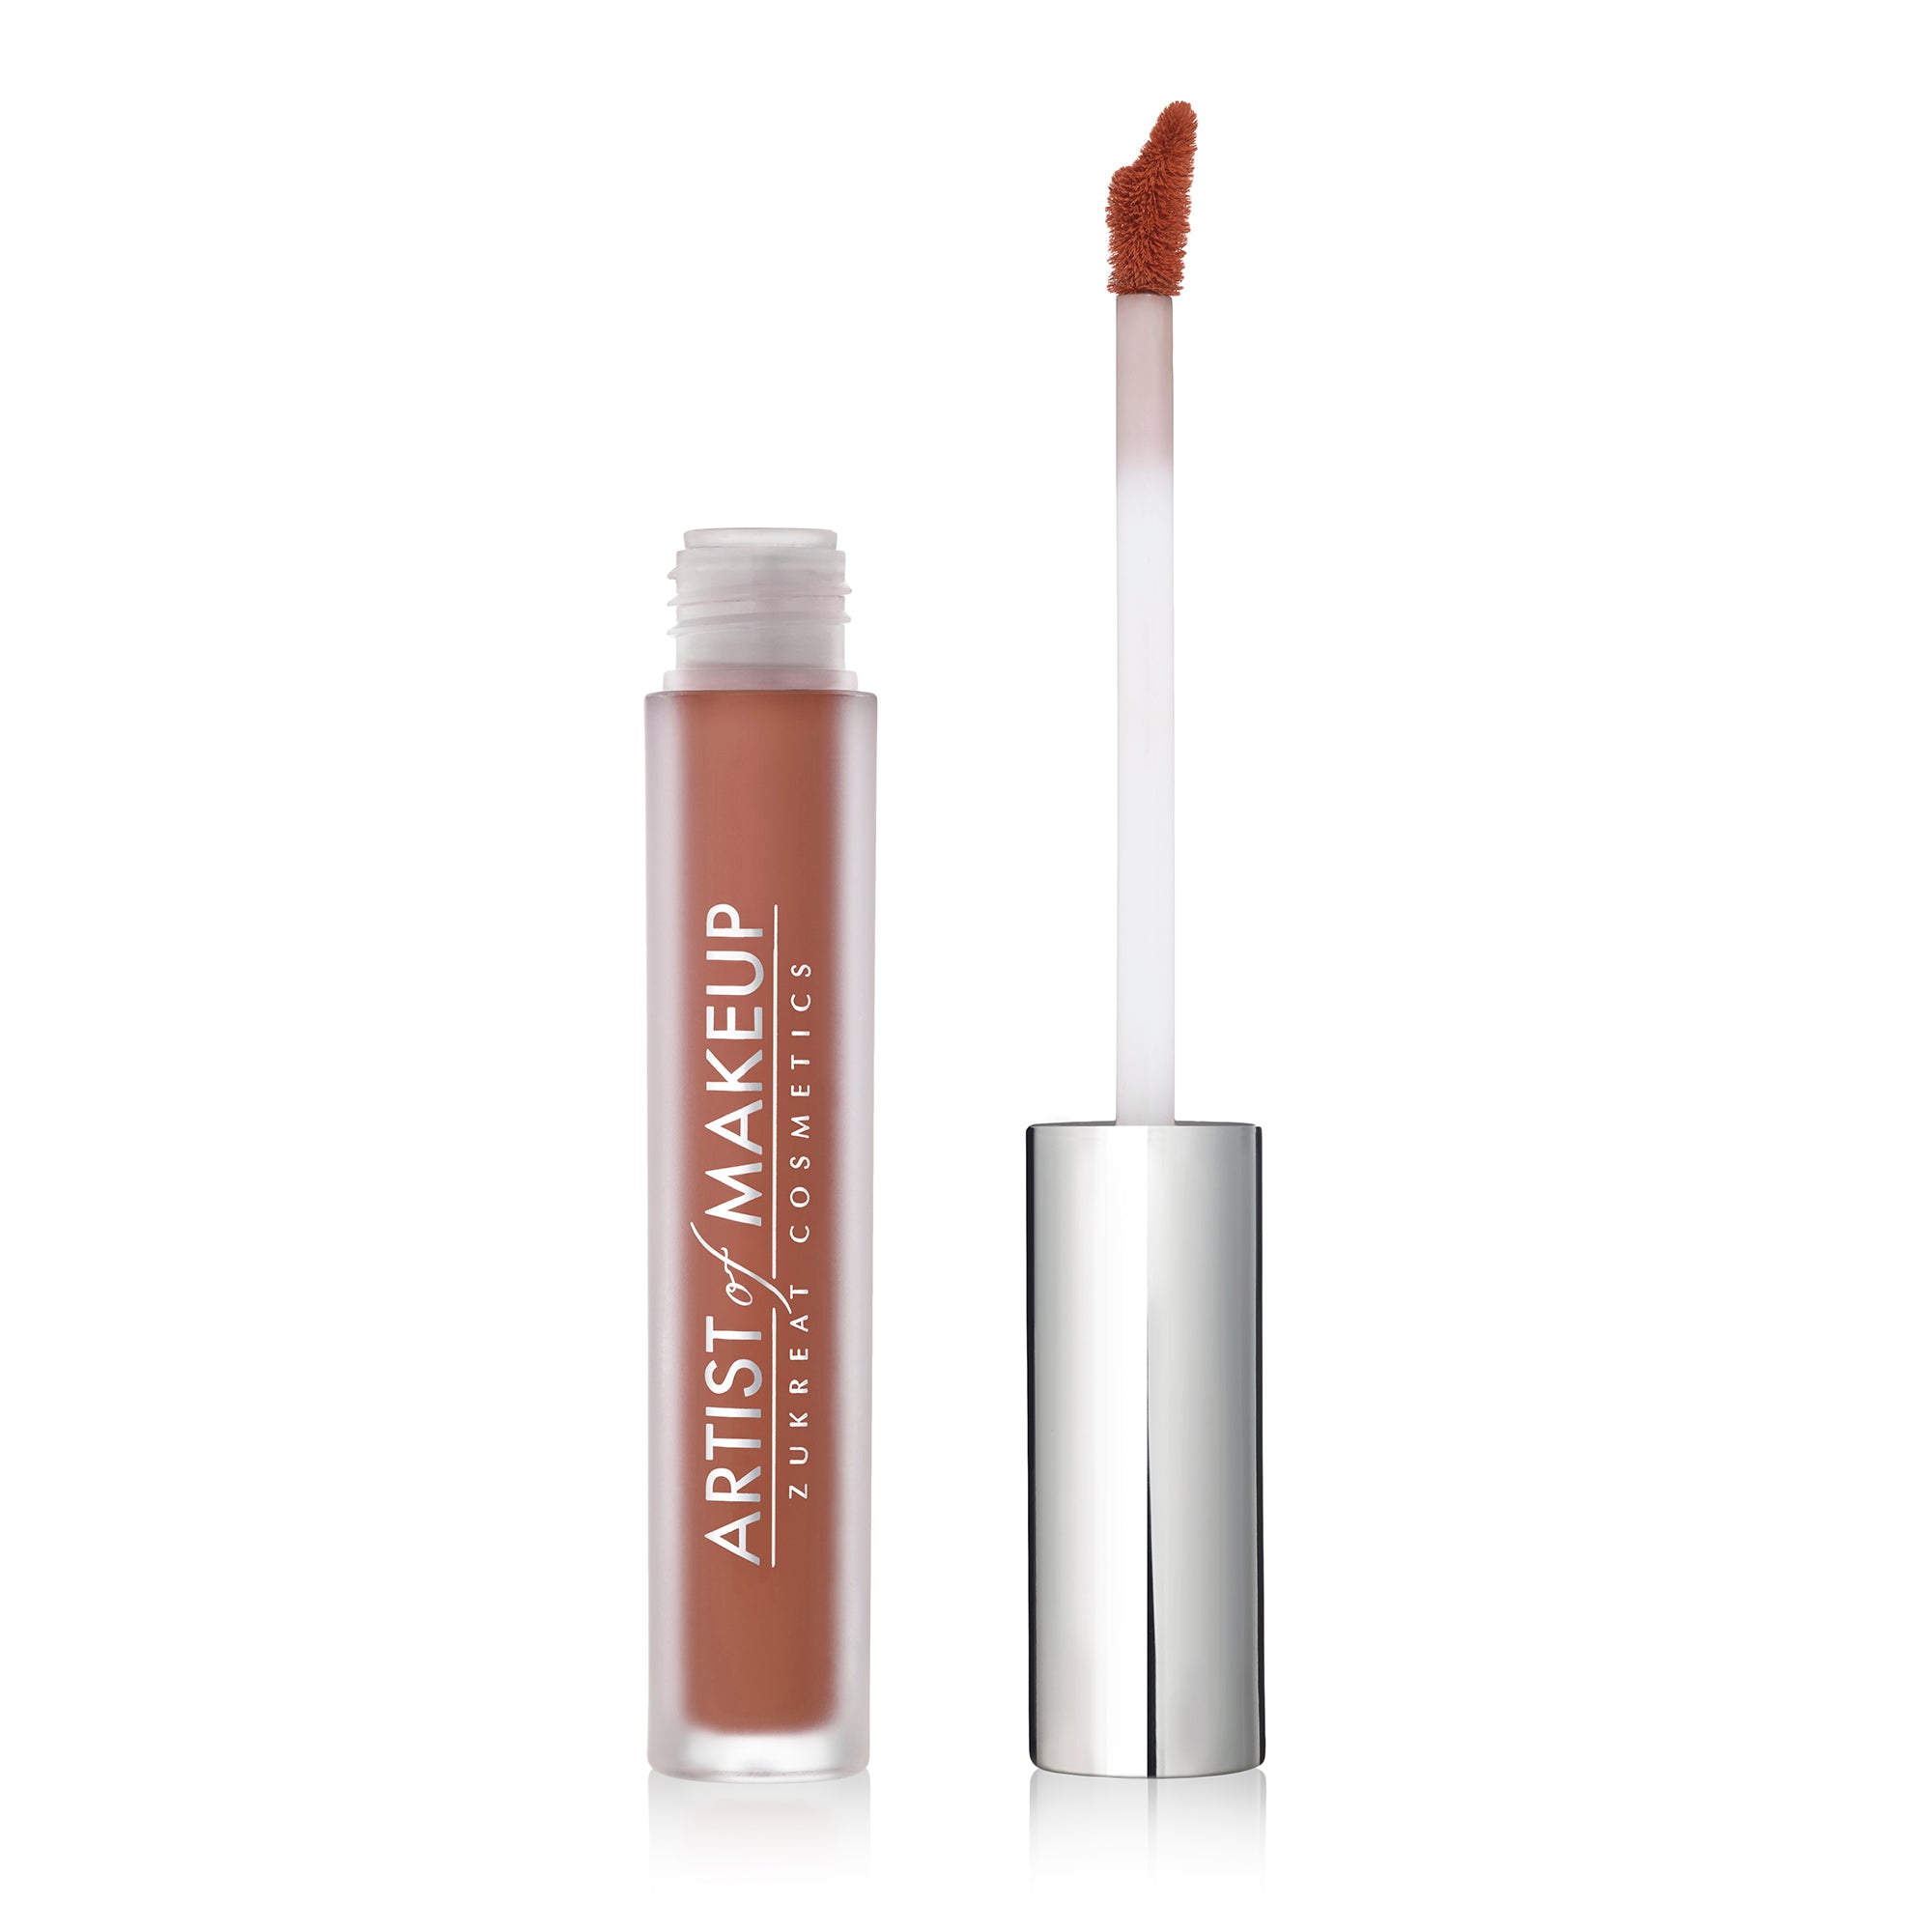 Unstoppable - Extreme Matte Liquid Lipstick